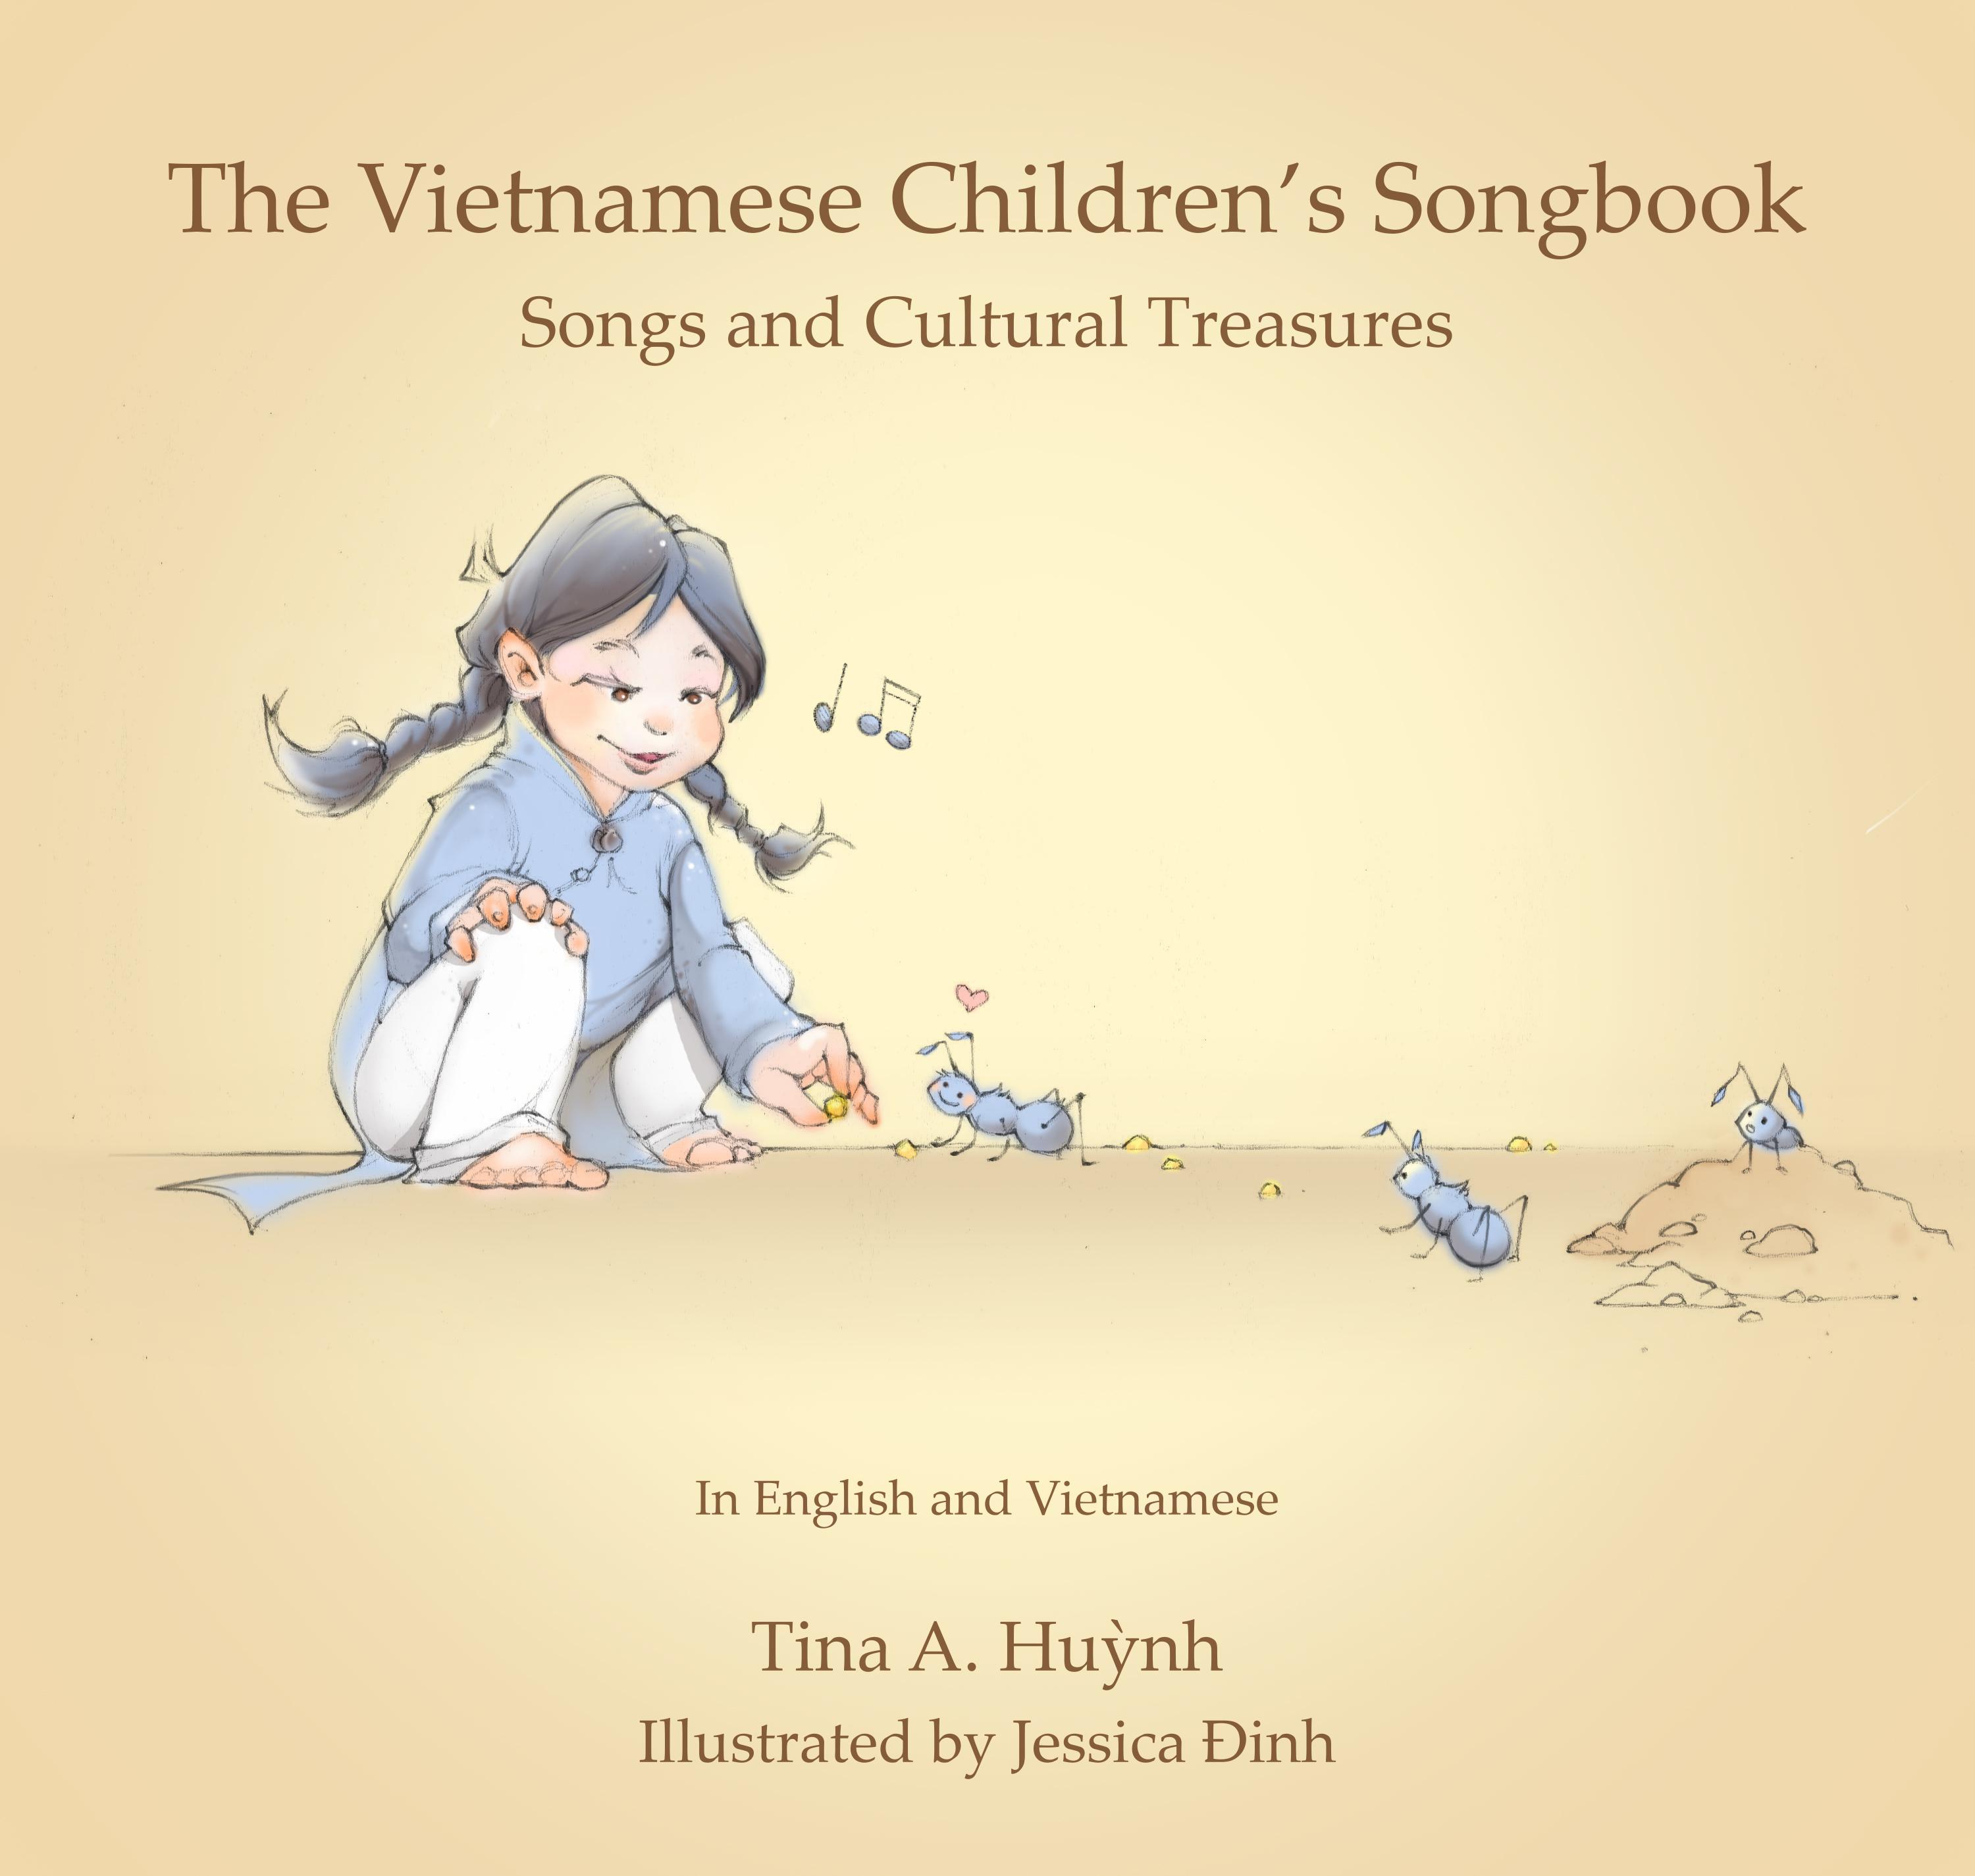 The Vietnamese Children's Songbook